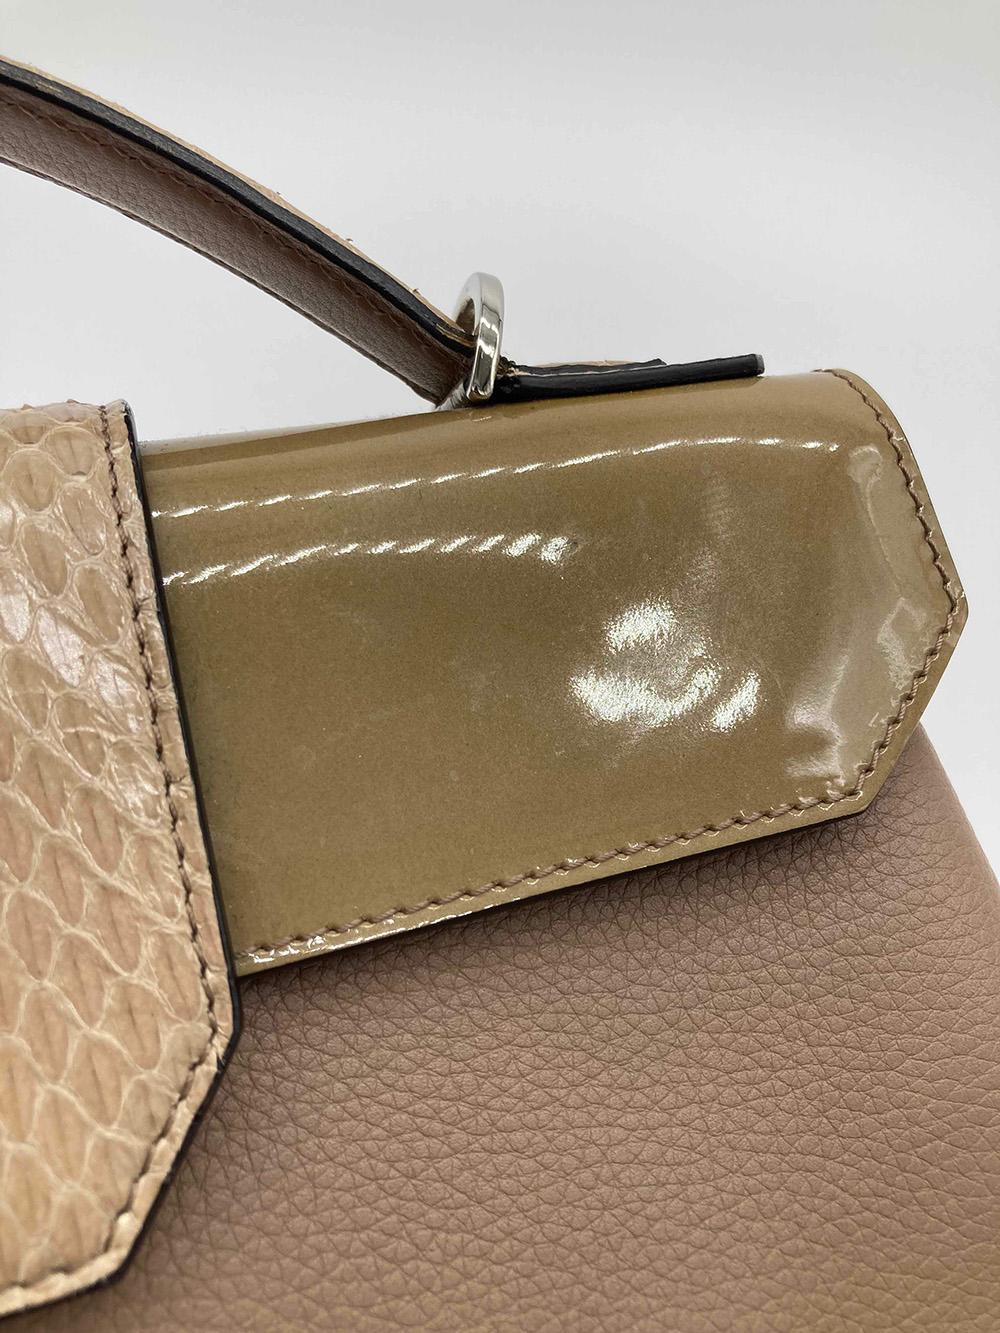 Cartier Classic Beige Feminine Line Top Handle Bag For Sale 5